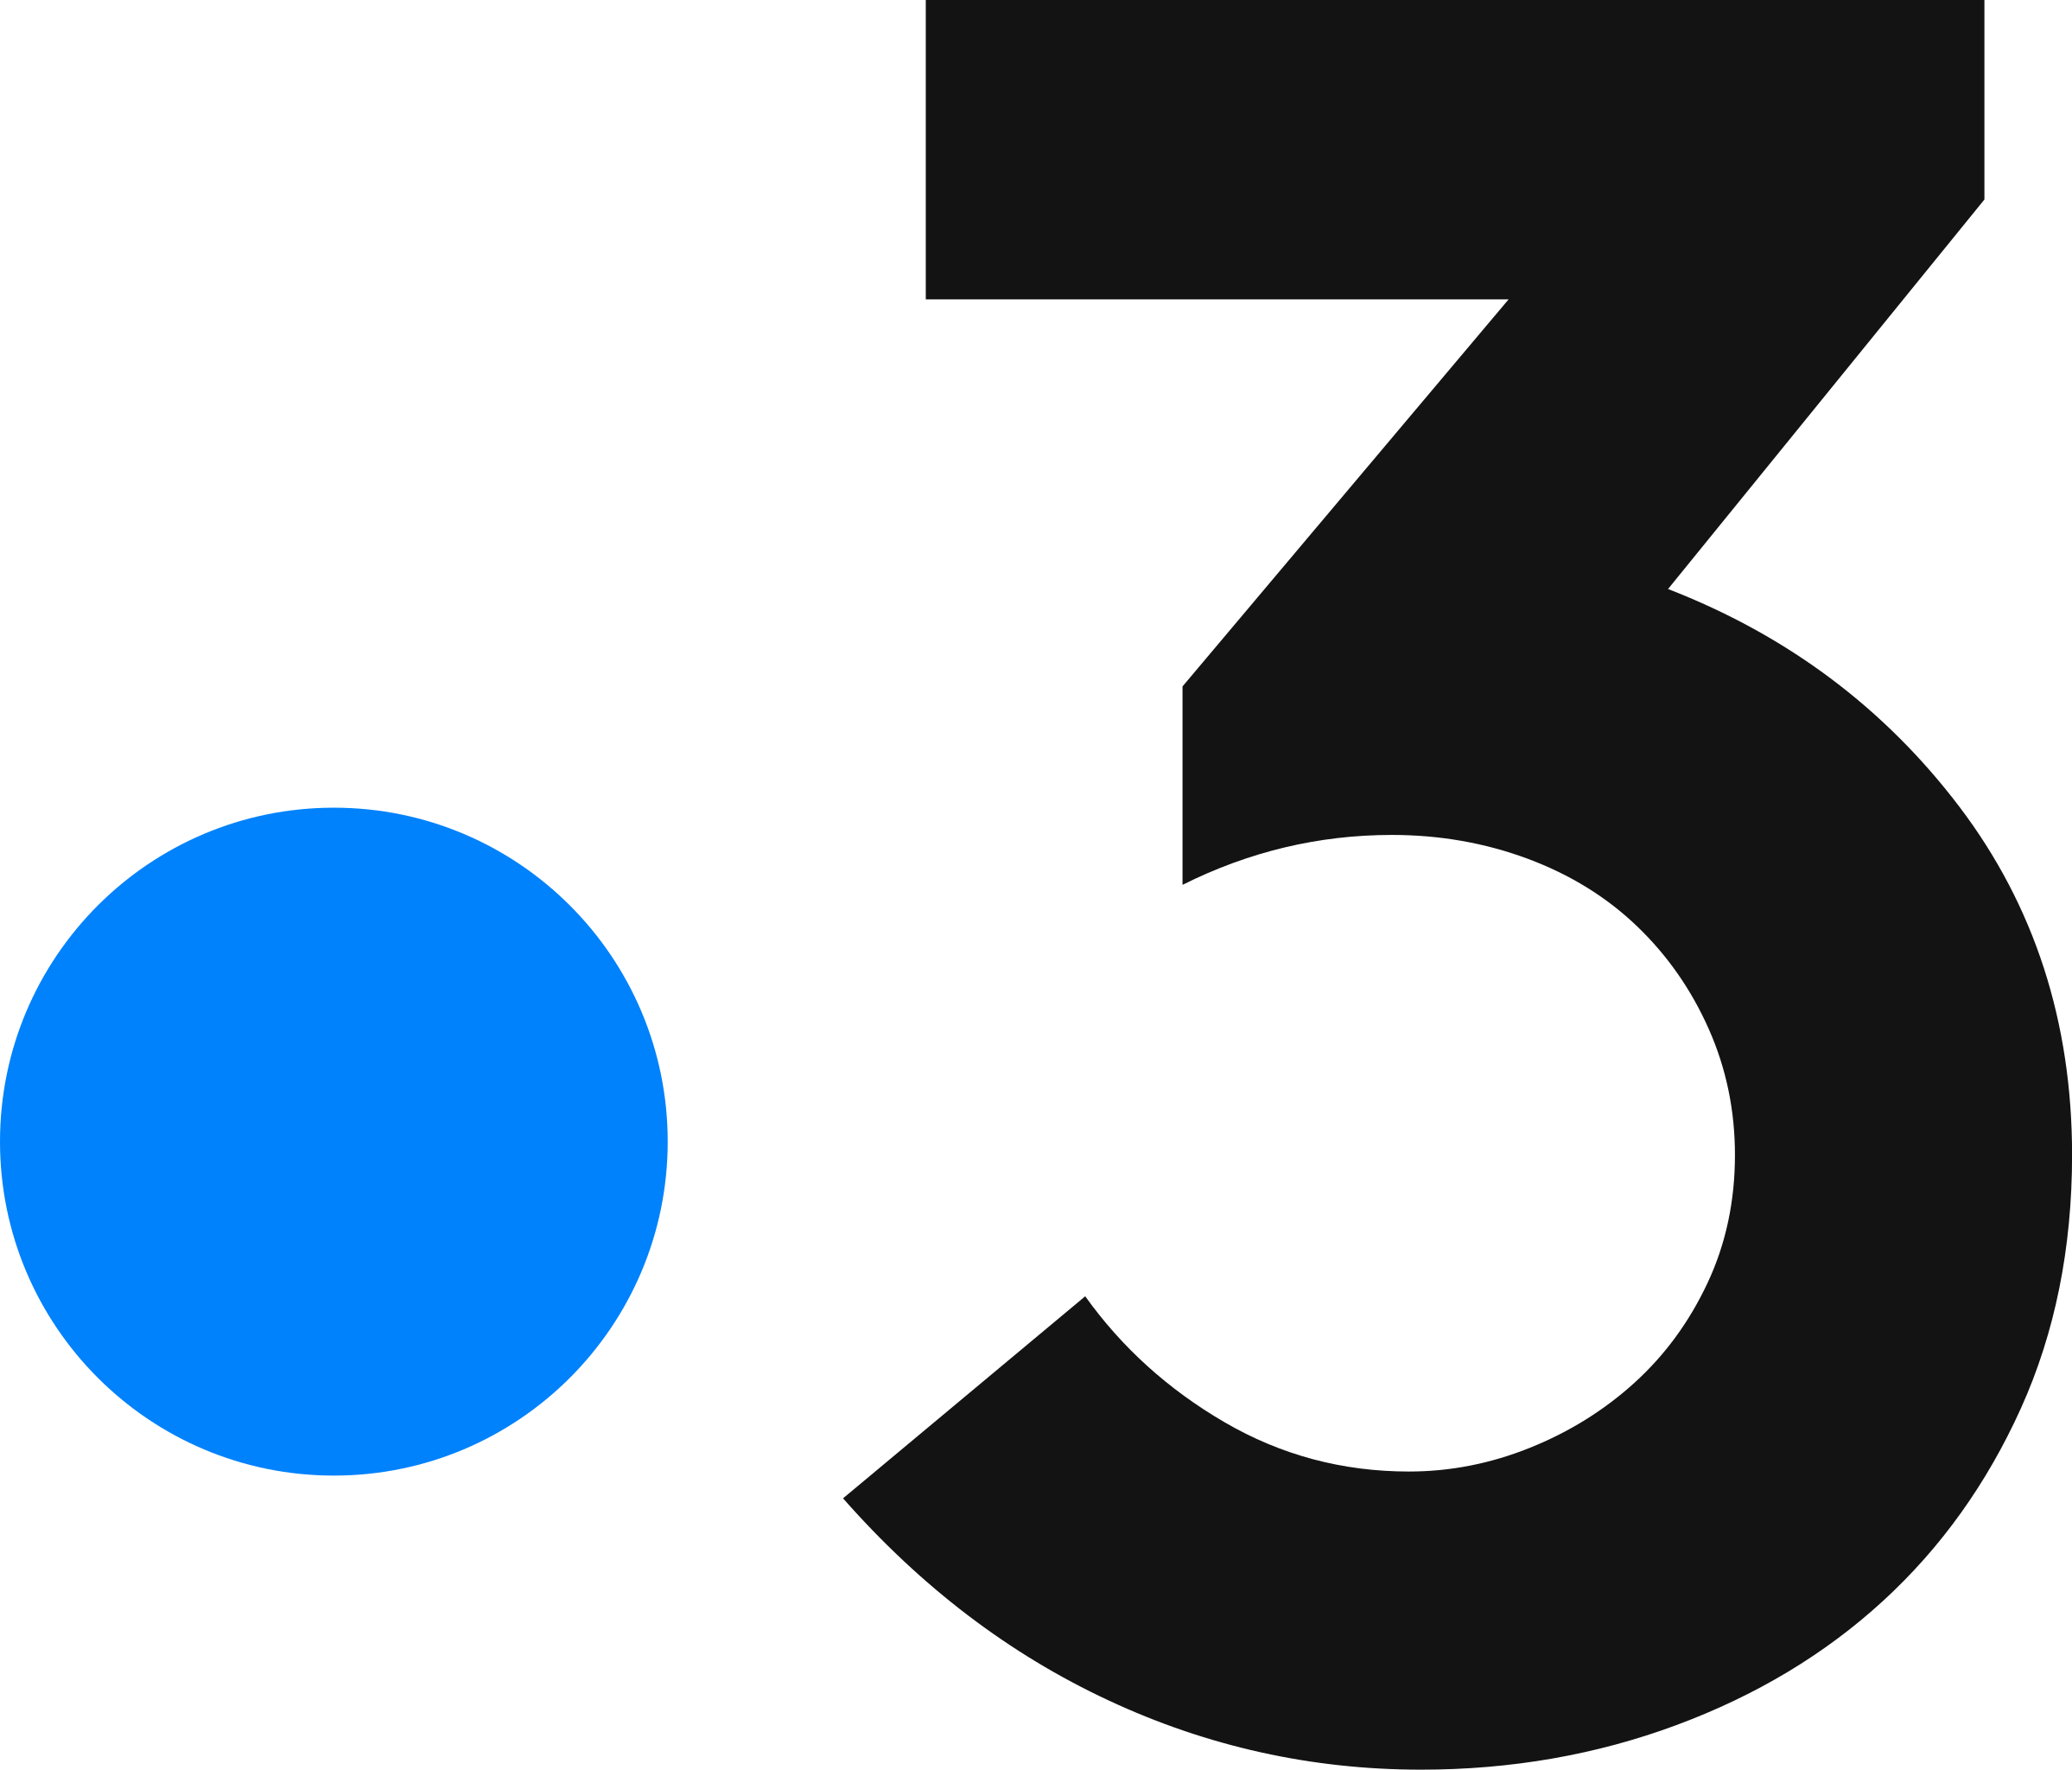 france 3 logo